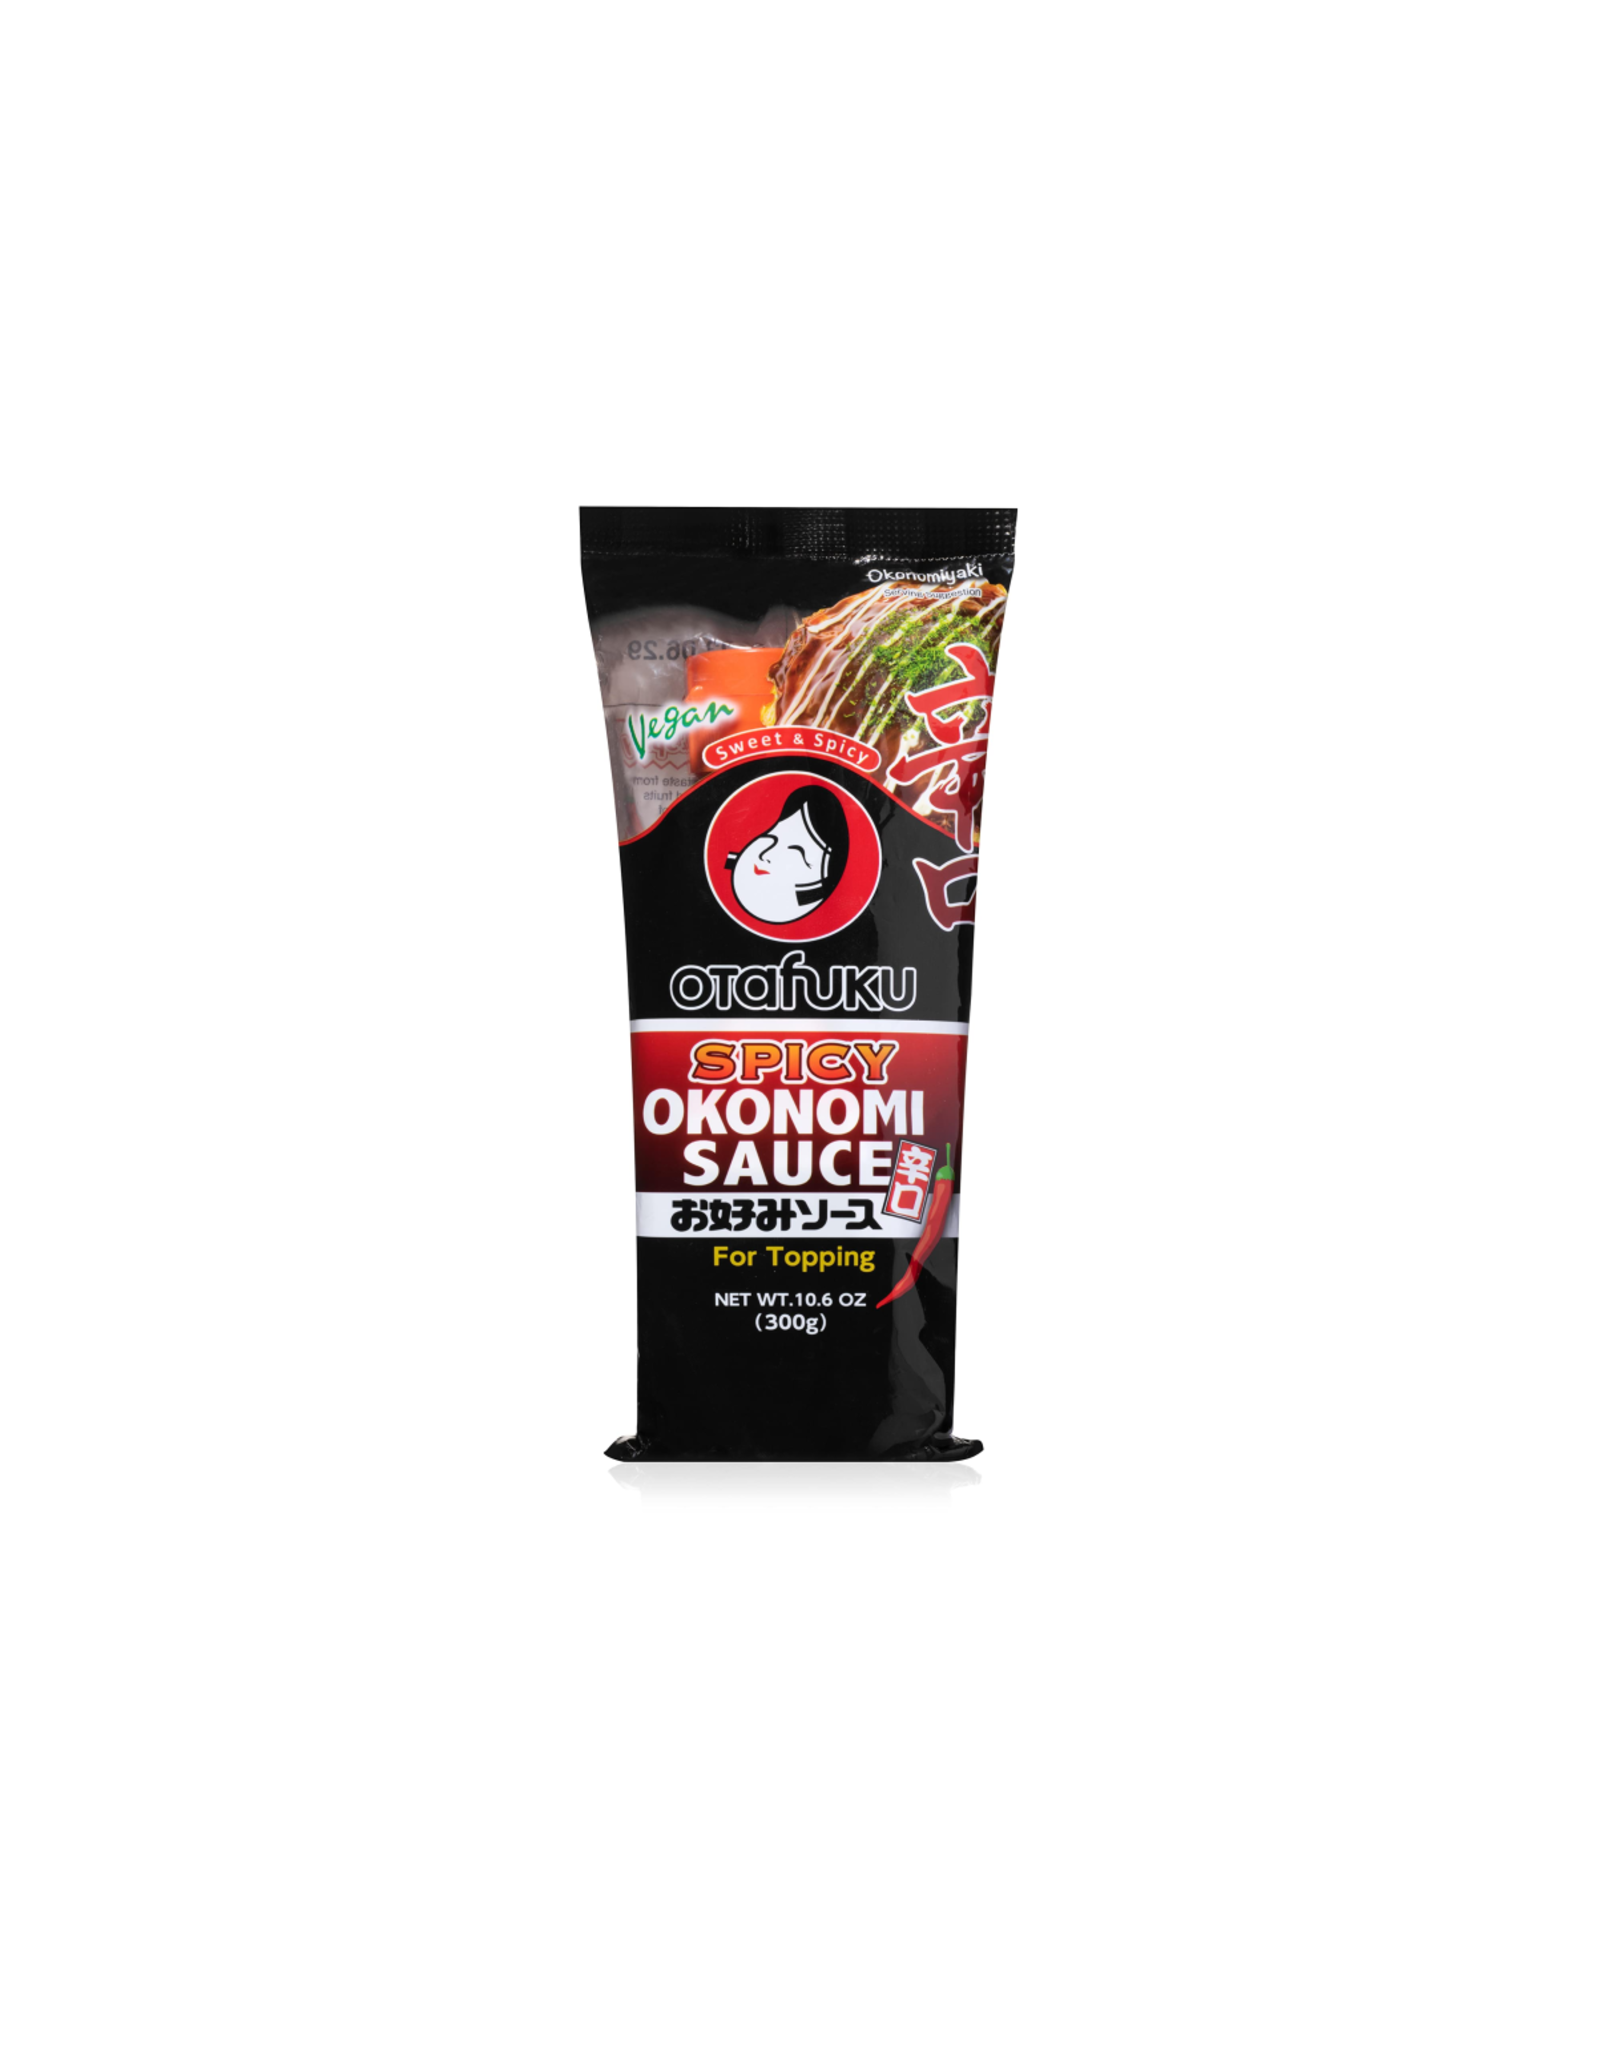 Otafuku Spicy Okonomi Sauce | VEGAN